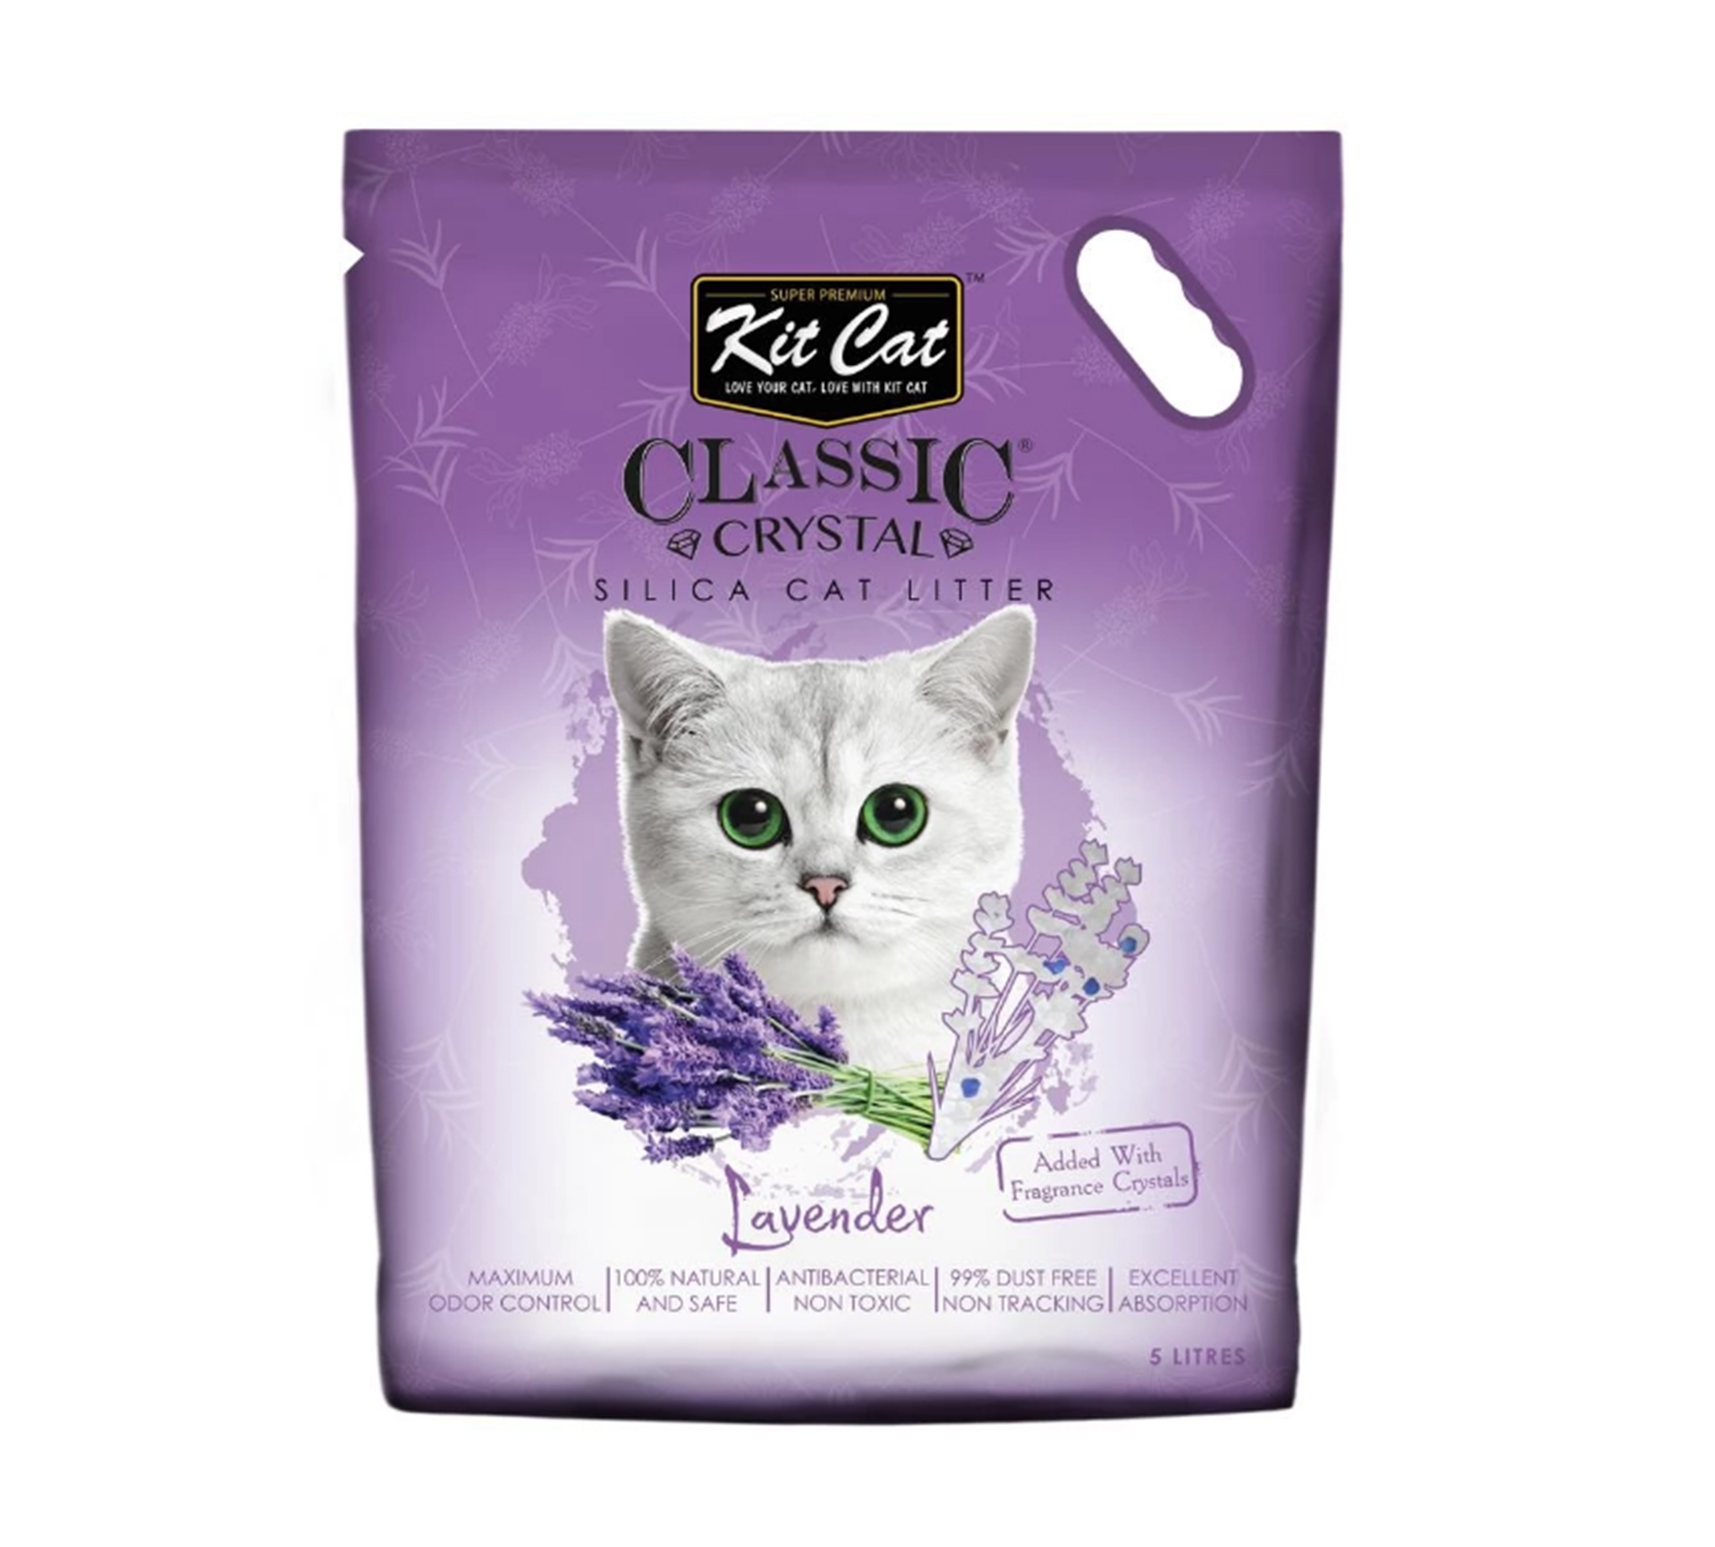 Cát thủy tinh Kitcat Classic Crystal túi 5l hương hoa lavender